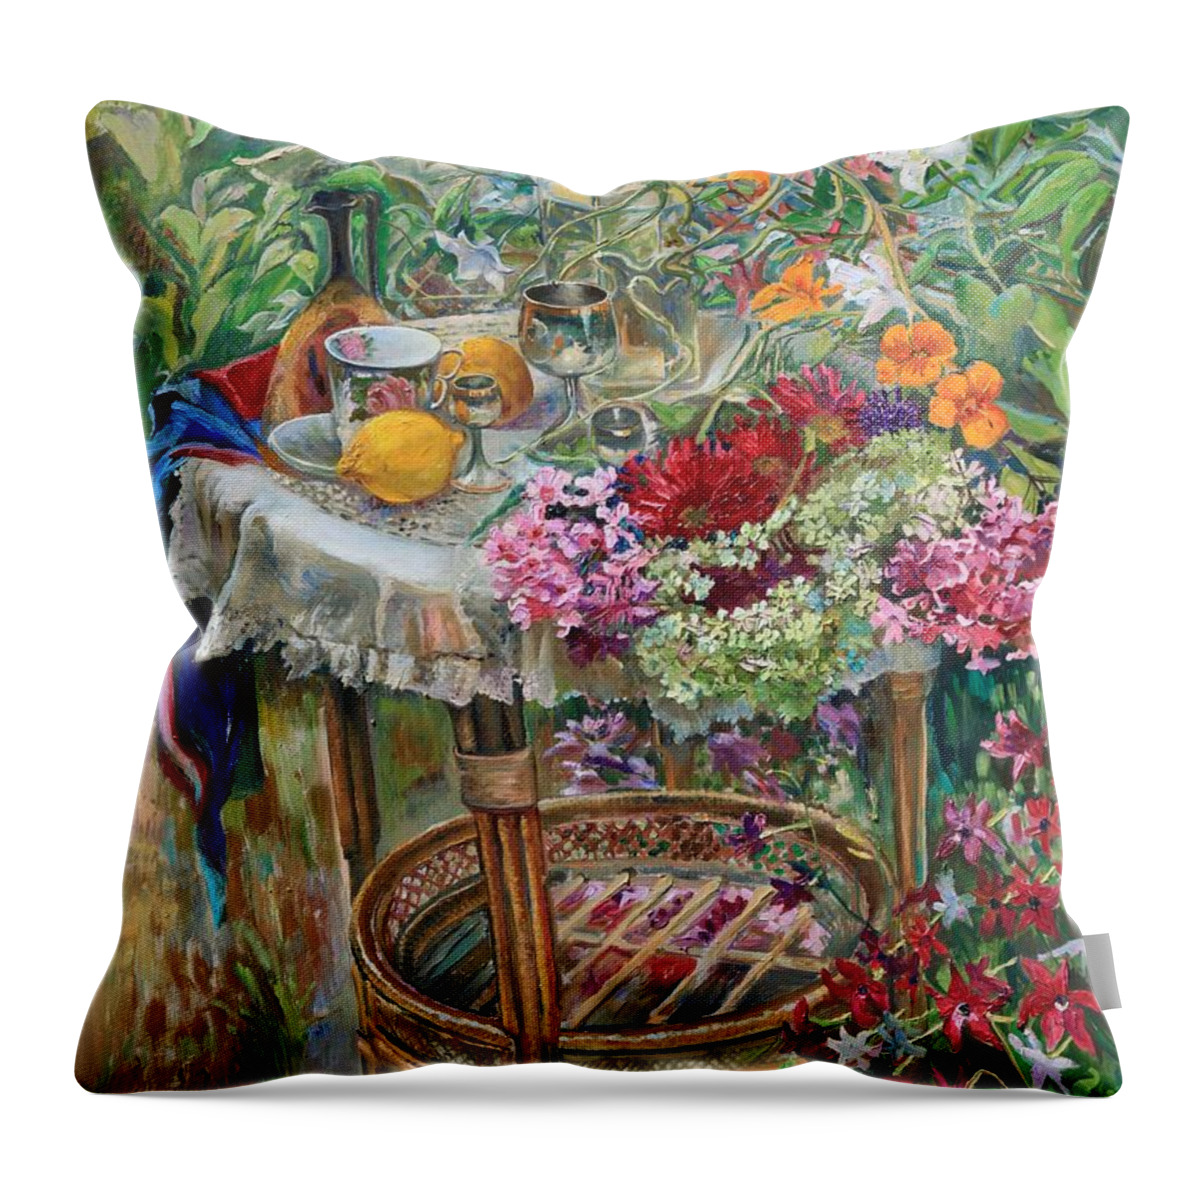 Maya Gusarina Throw Pillow featuring the painting In the Garden by Maya Gusarina